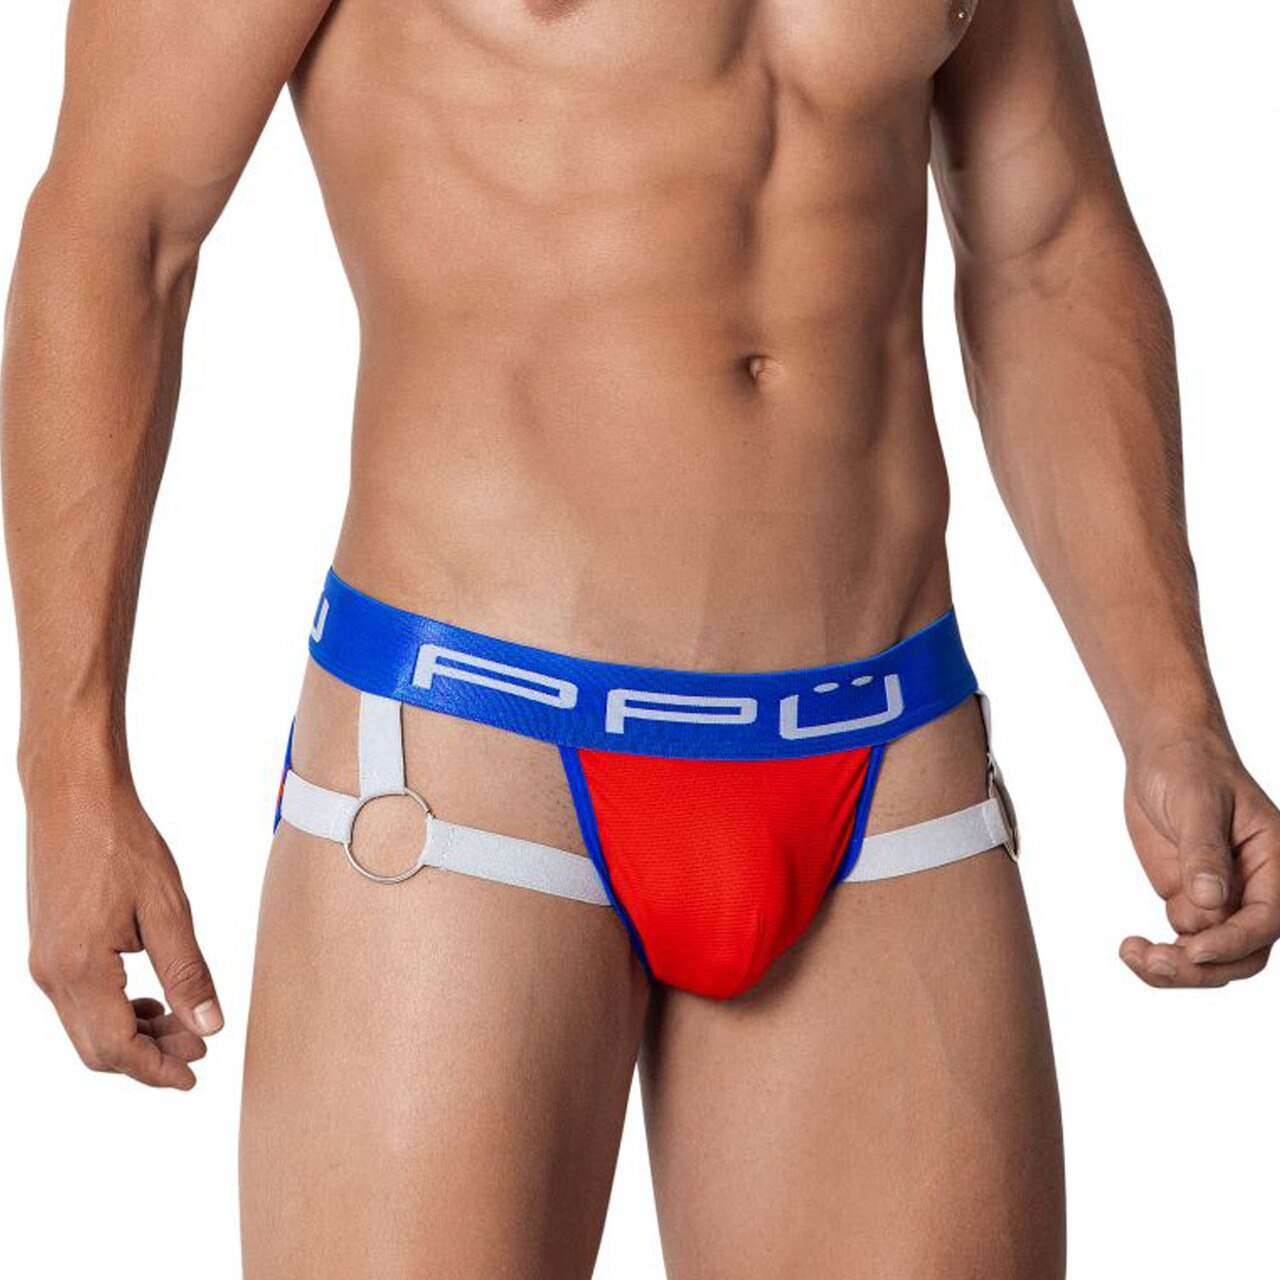 SALE - Mens PPU Underwear Strap Jock Strap with Metal Rings Red